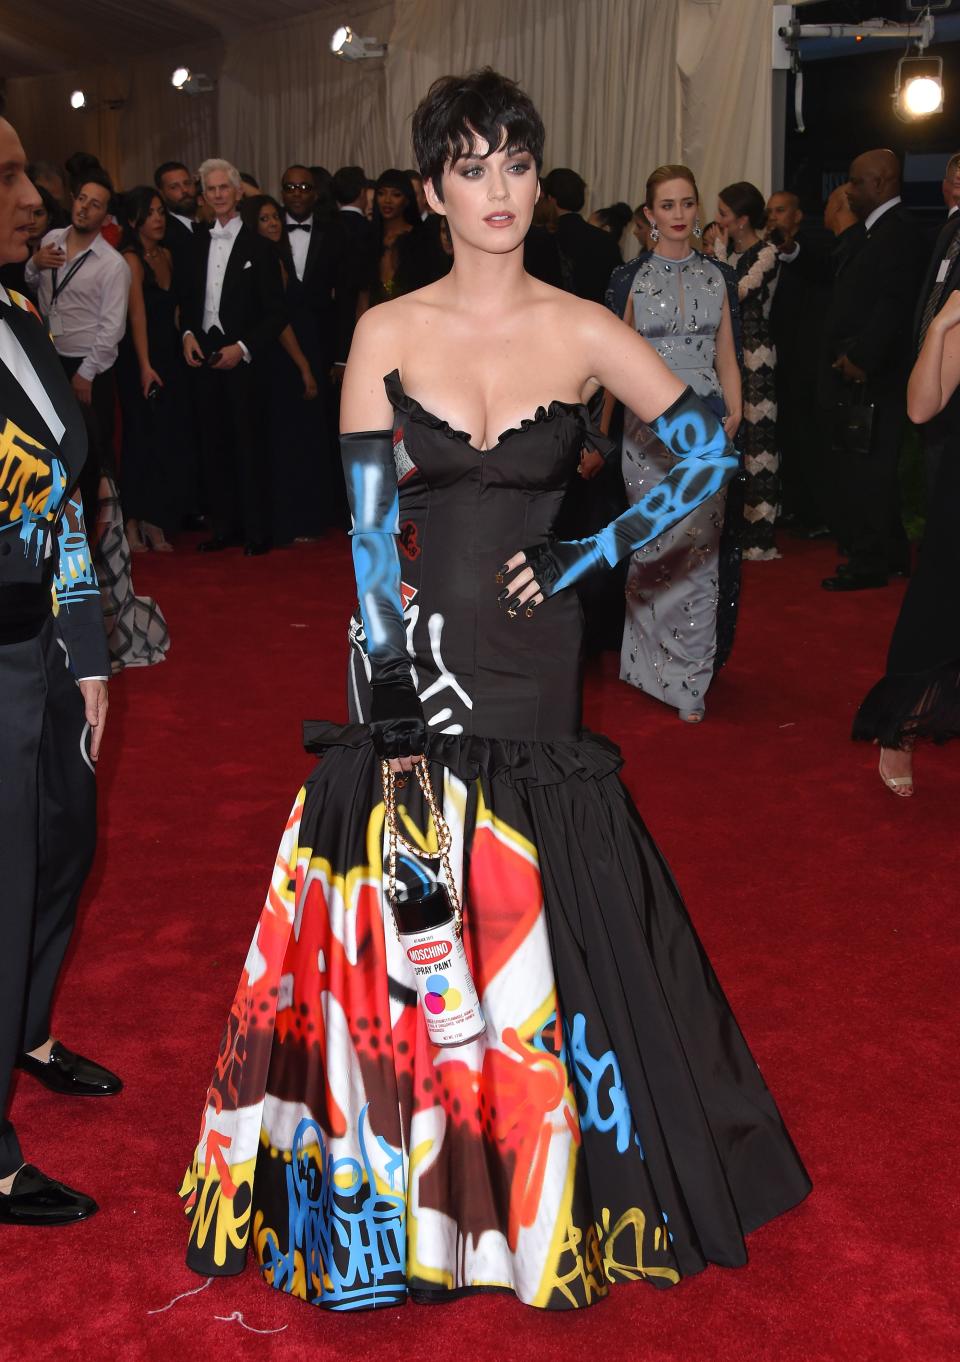 Katy Perry at the 2015 Met Gala in black gown